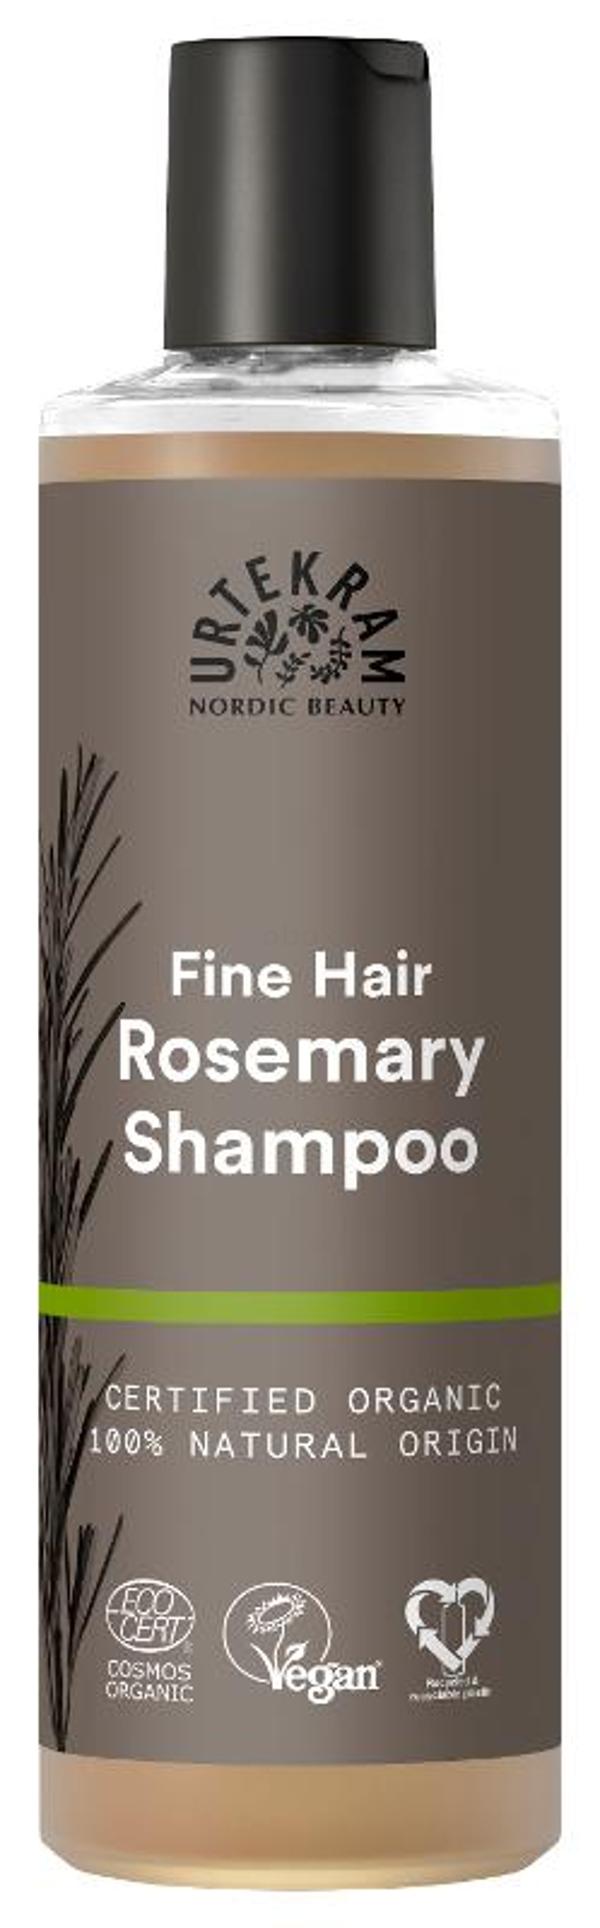 Produktfoto zu Rosmarin Shampoo 250ml